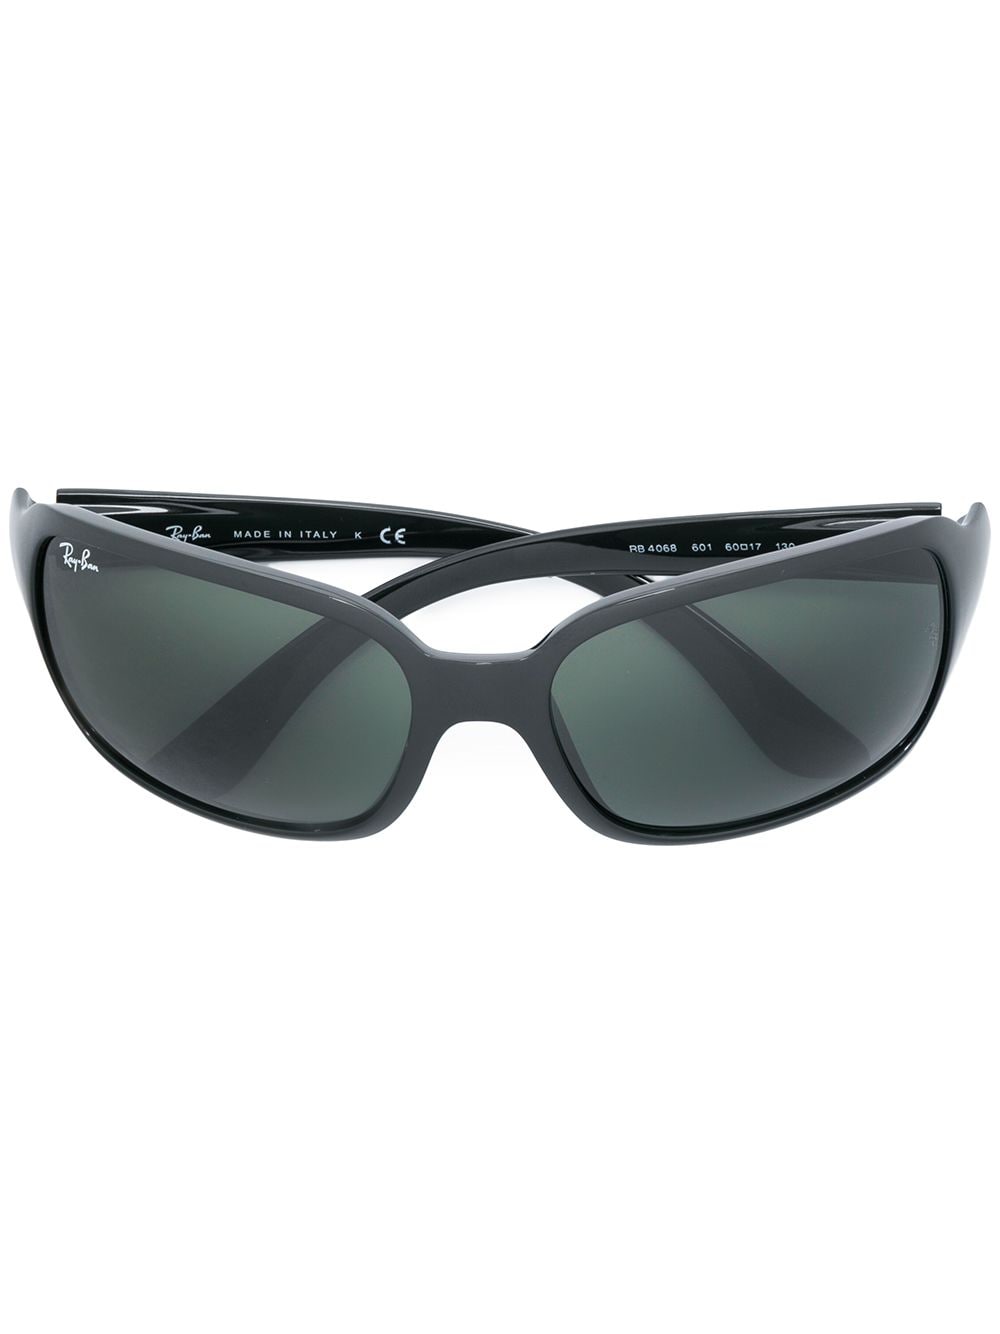 Ray-Ban rectangular shaped sunglasses - Black von Ray-Ban